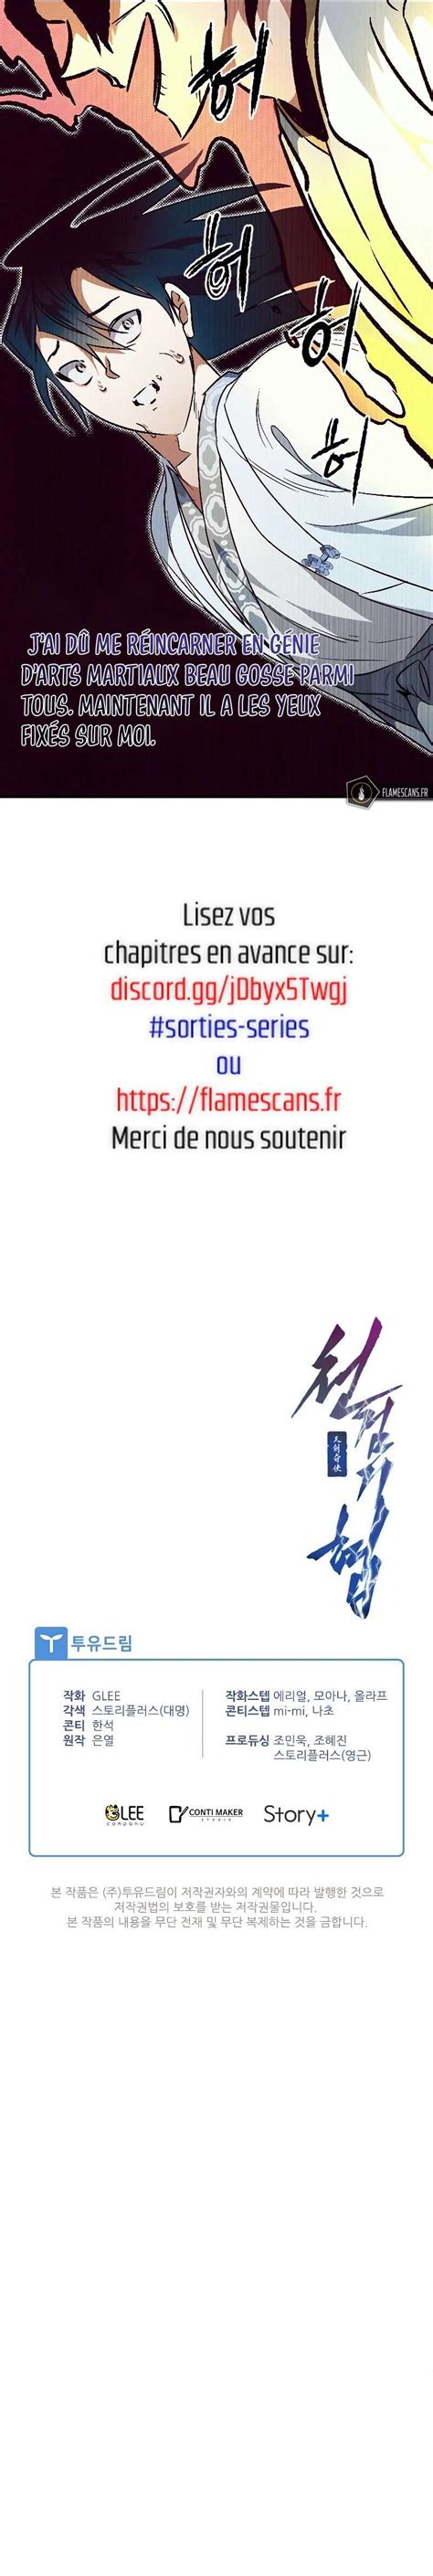 Saga Chapitre 23 French Edition Doc